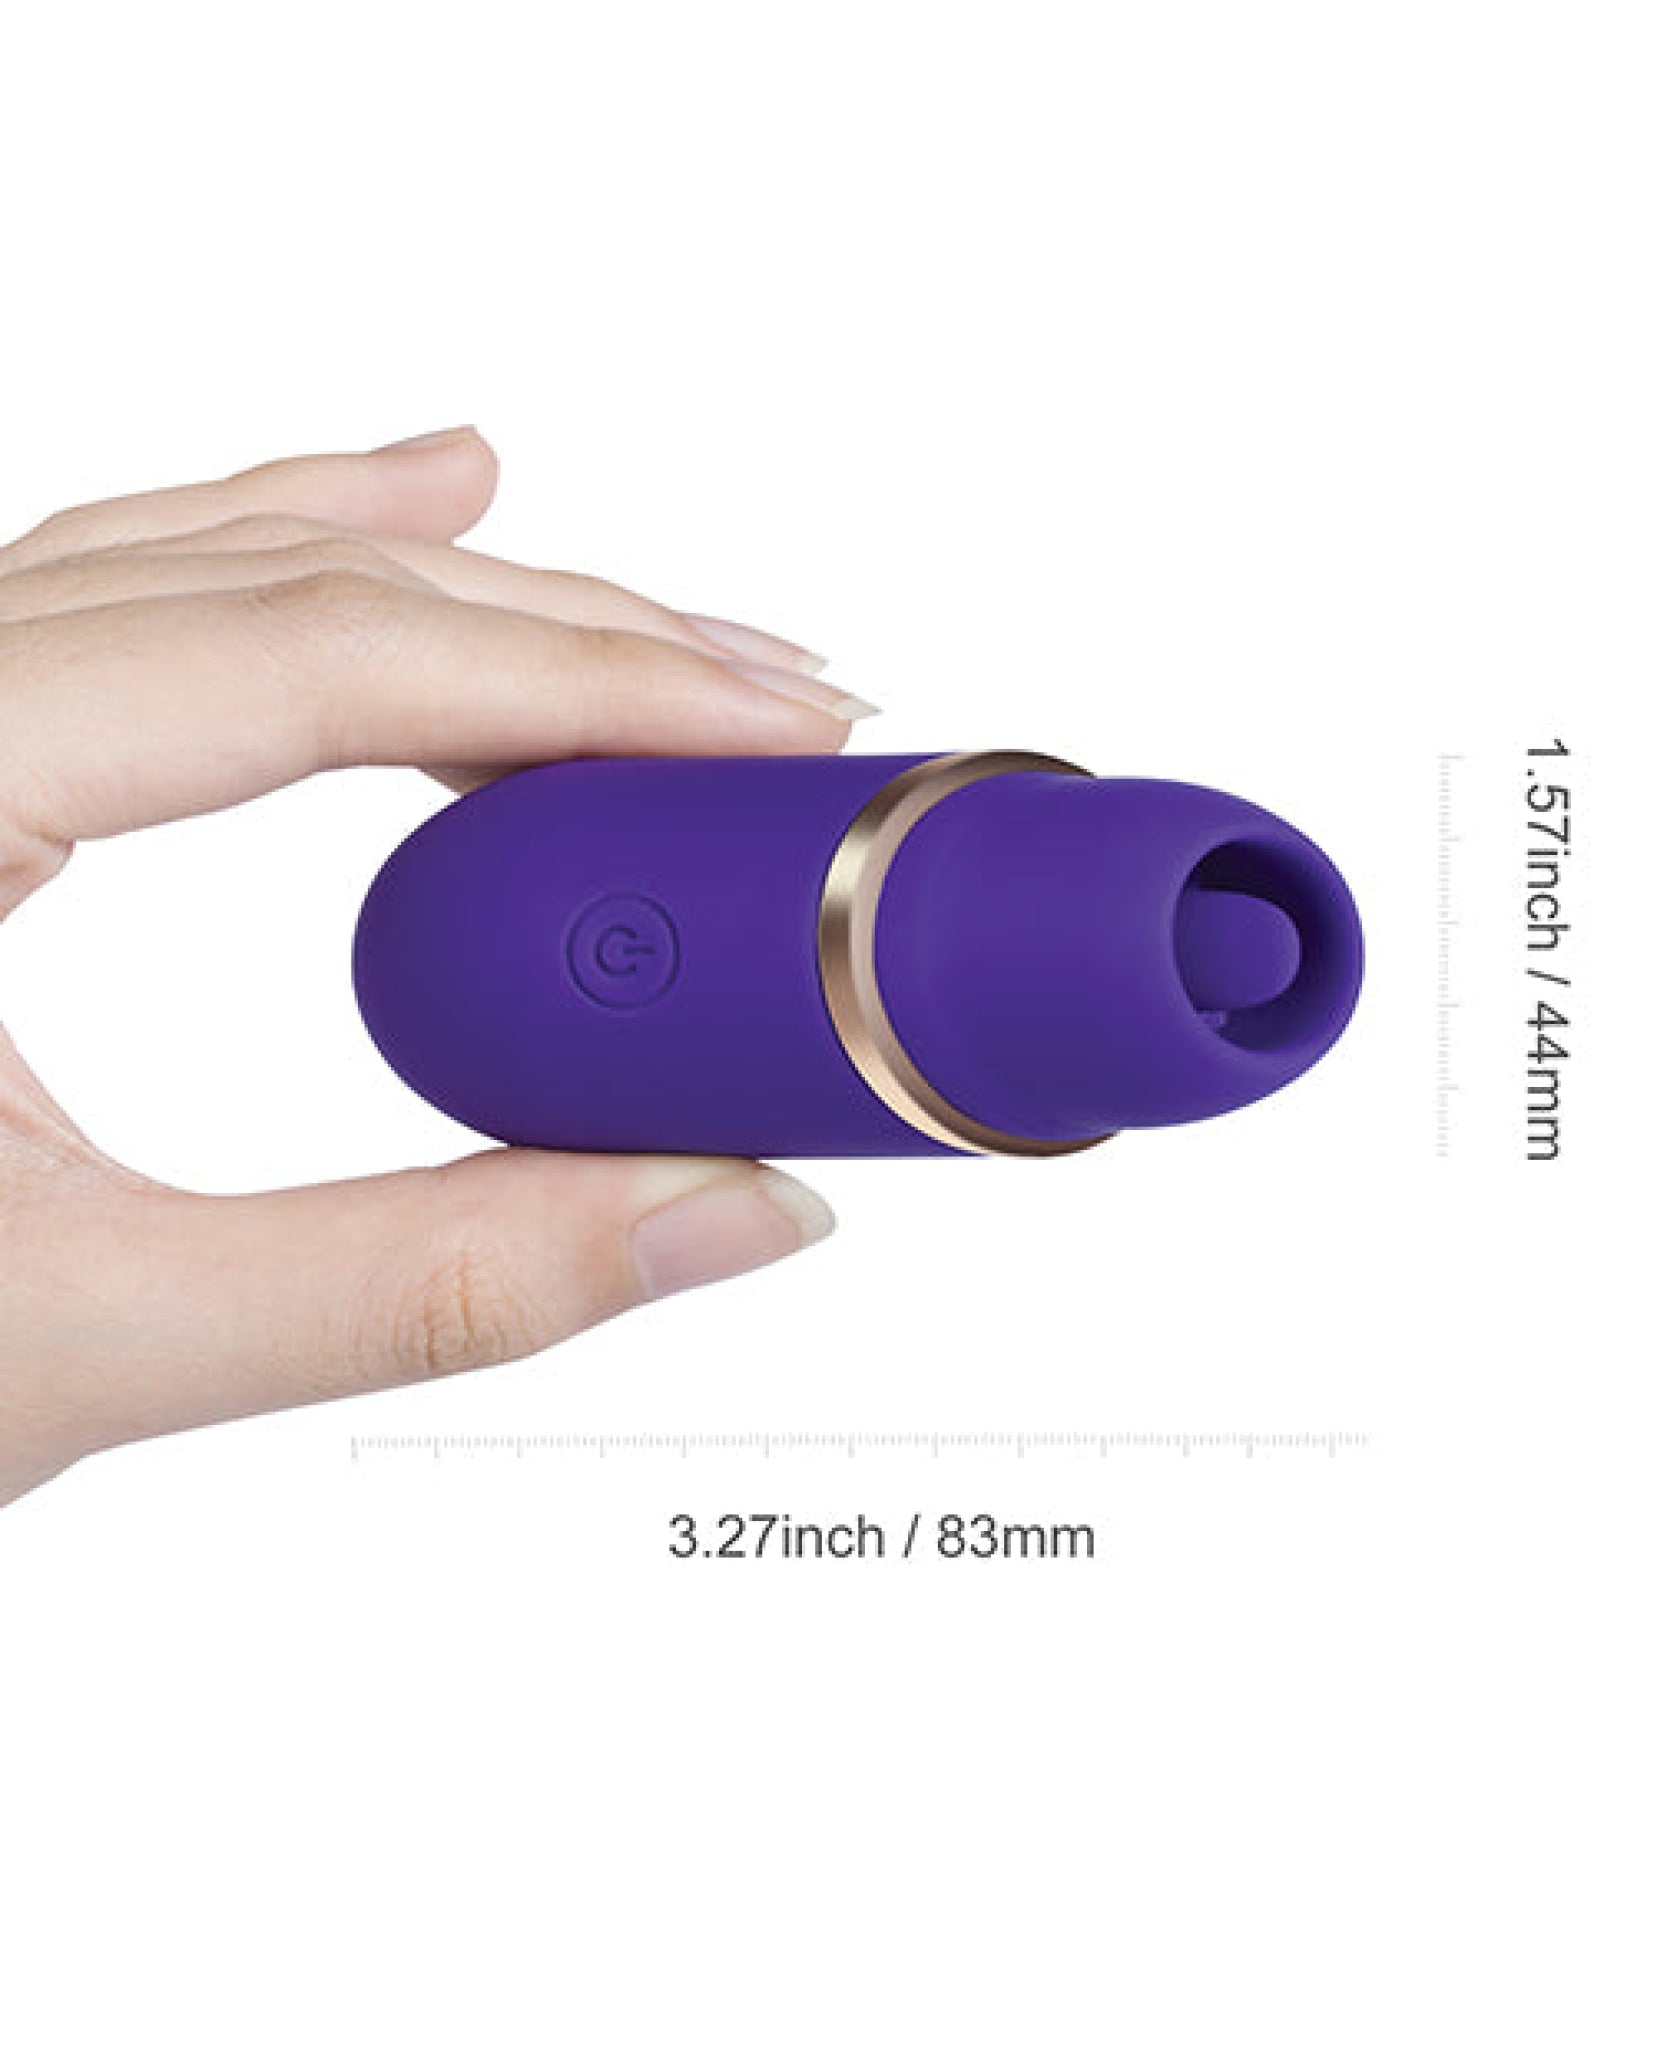 Abby Mini Clit Licking Vibrator Tongue Sex Toy - Purple Uc Global Trade